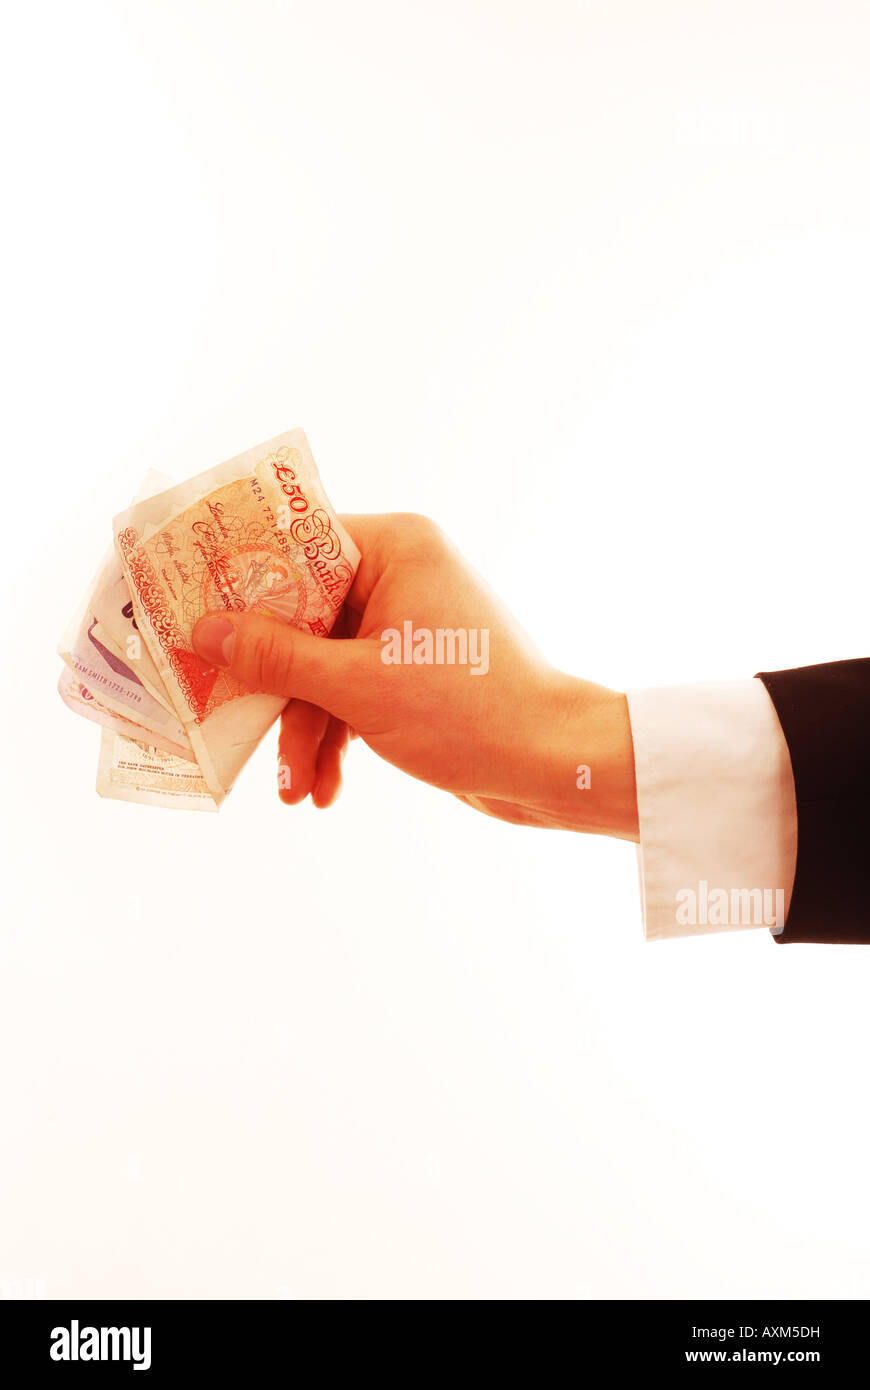 Handing money over - Business Stock Photo